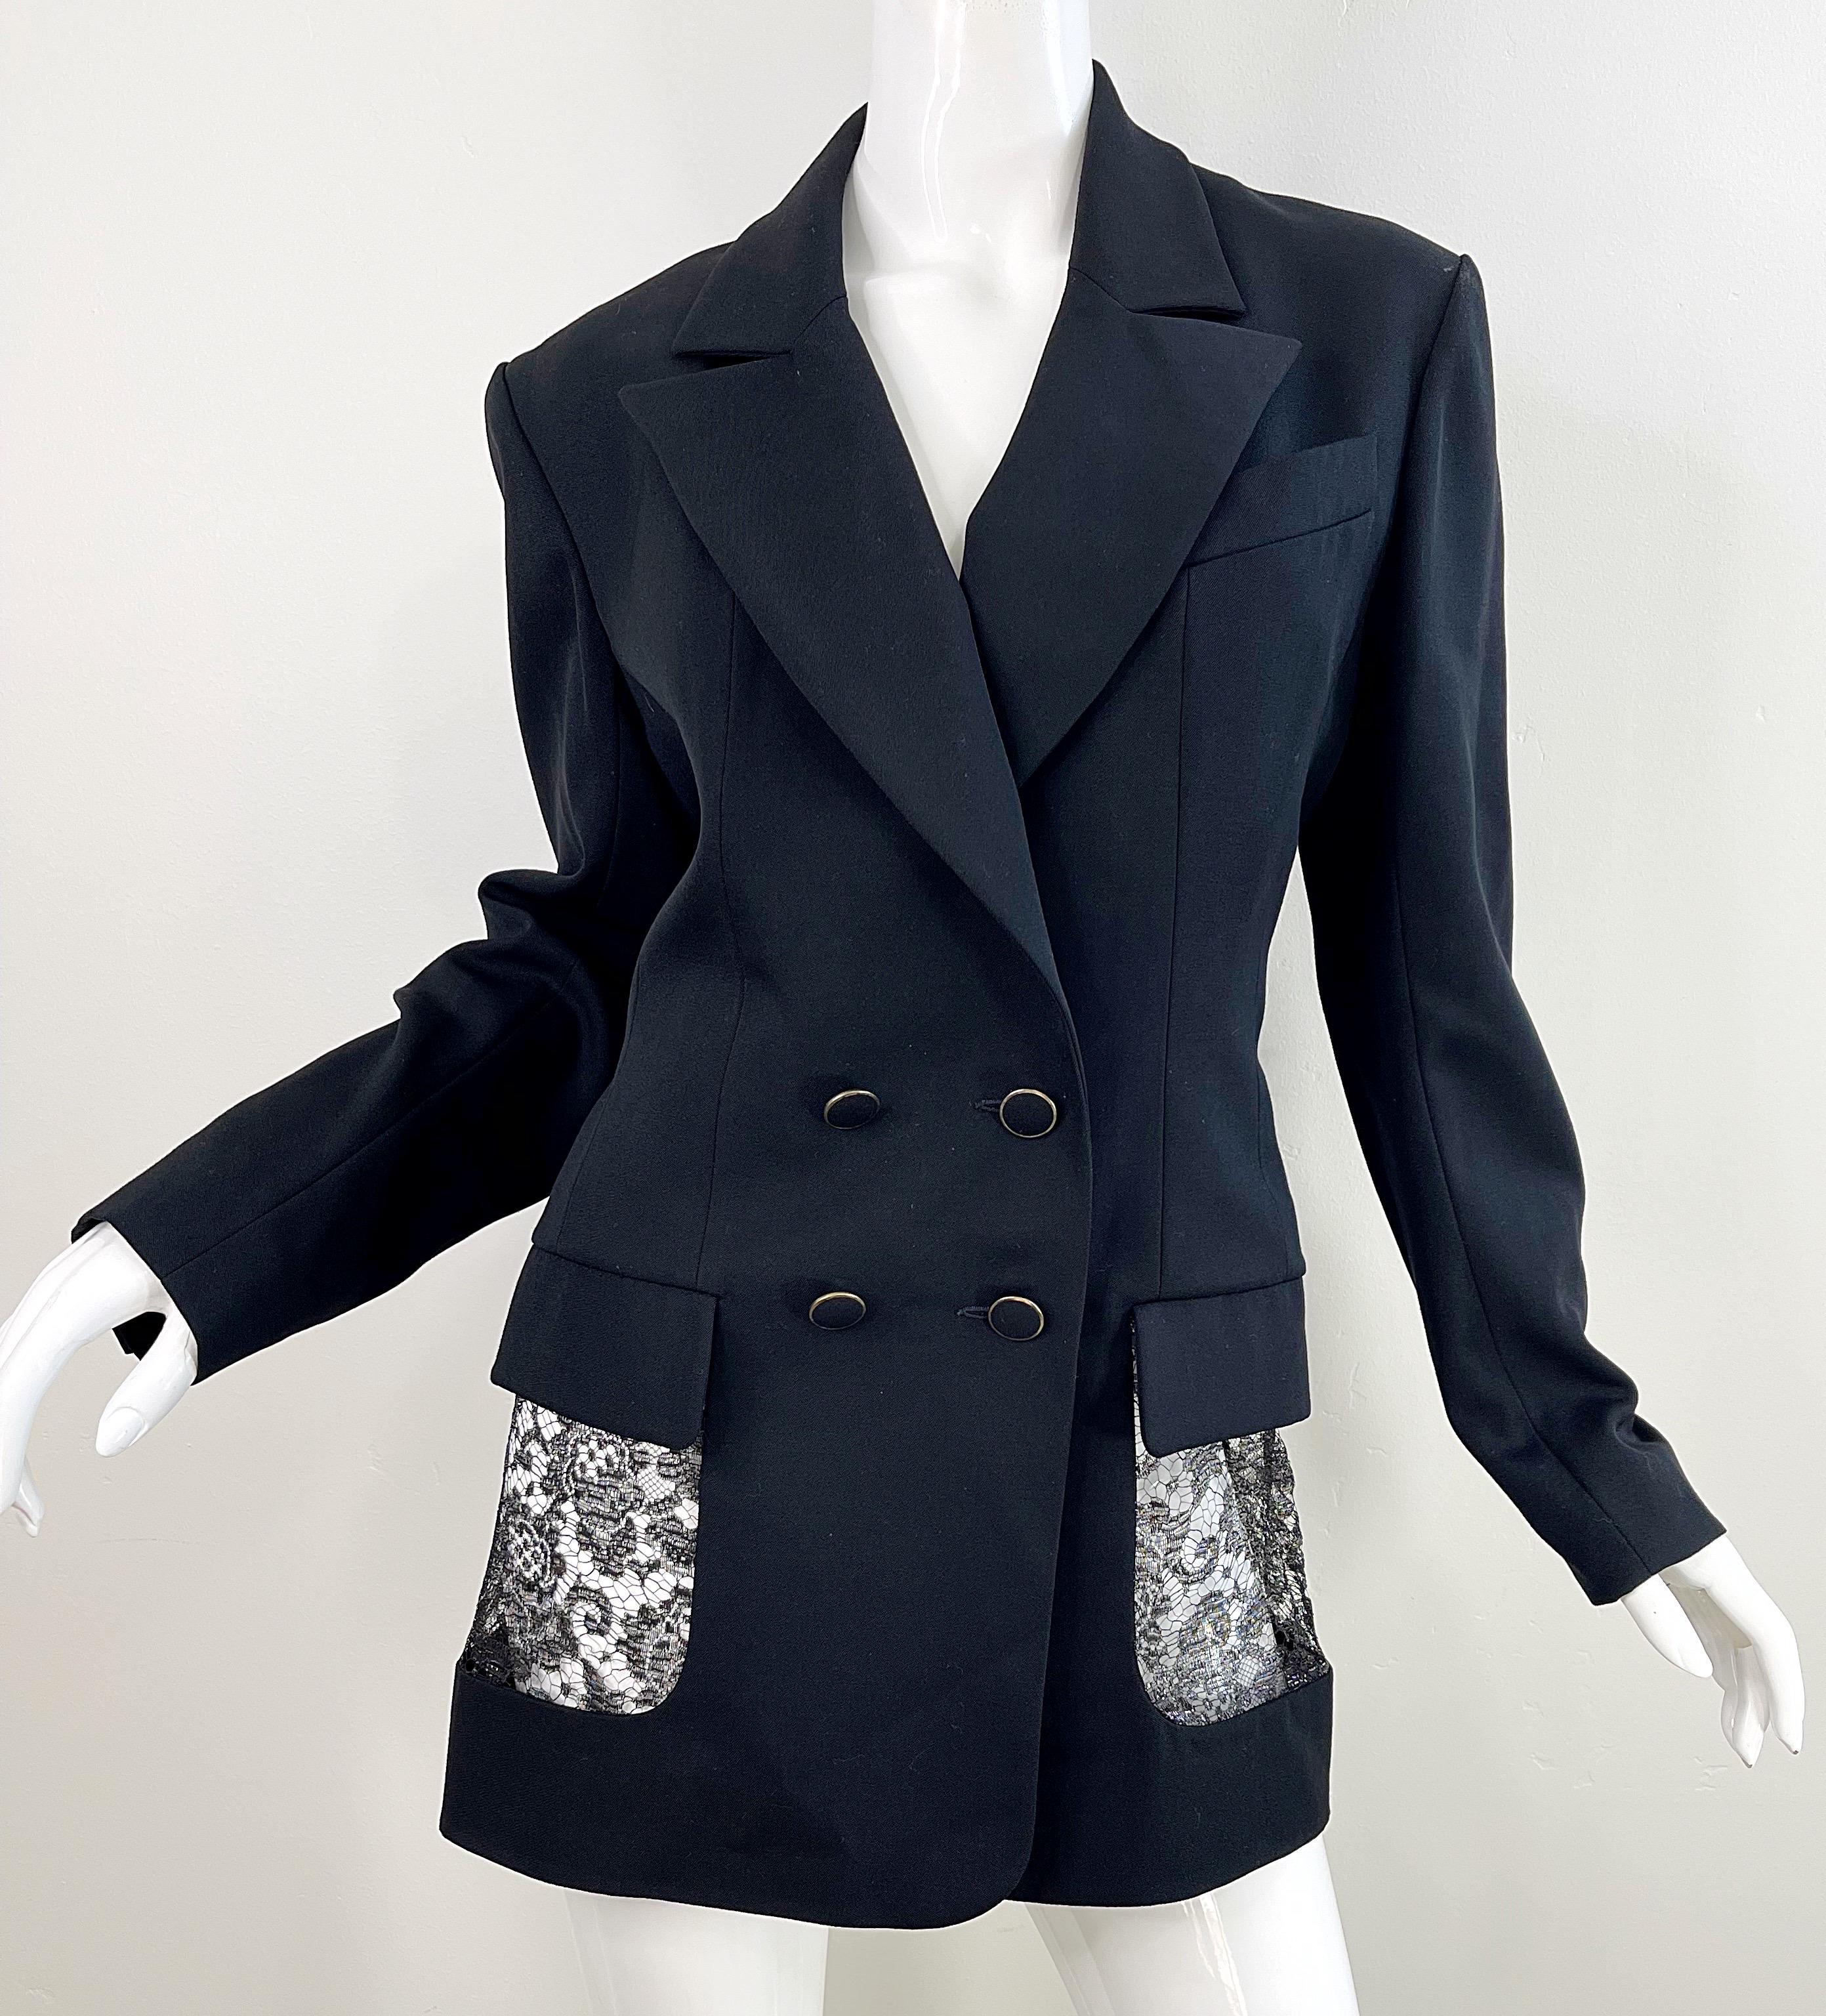 Karl Lagerfeld 1980s Black Lace Cut - Out Size 44 / 10 12 Vintage Dress + Jacket For Sale 11